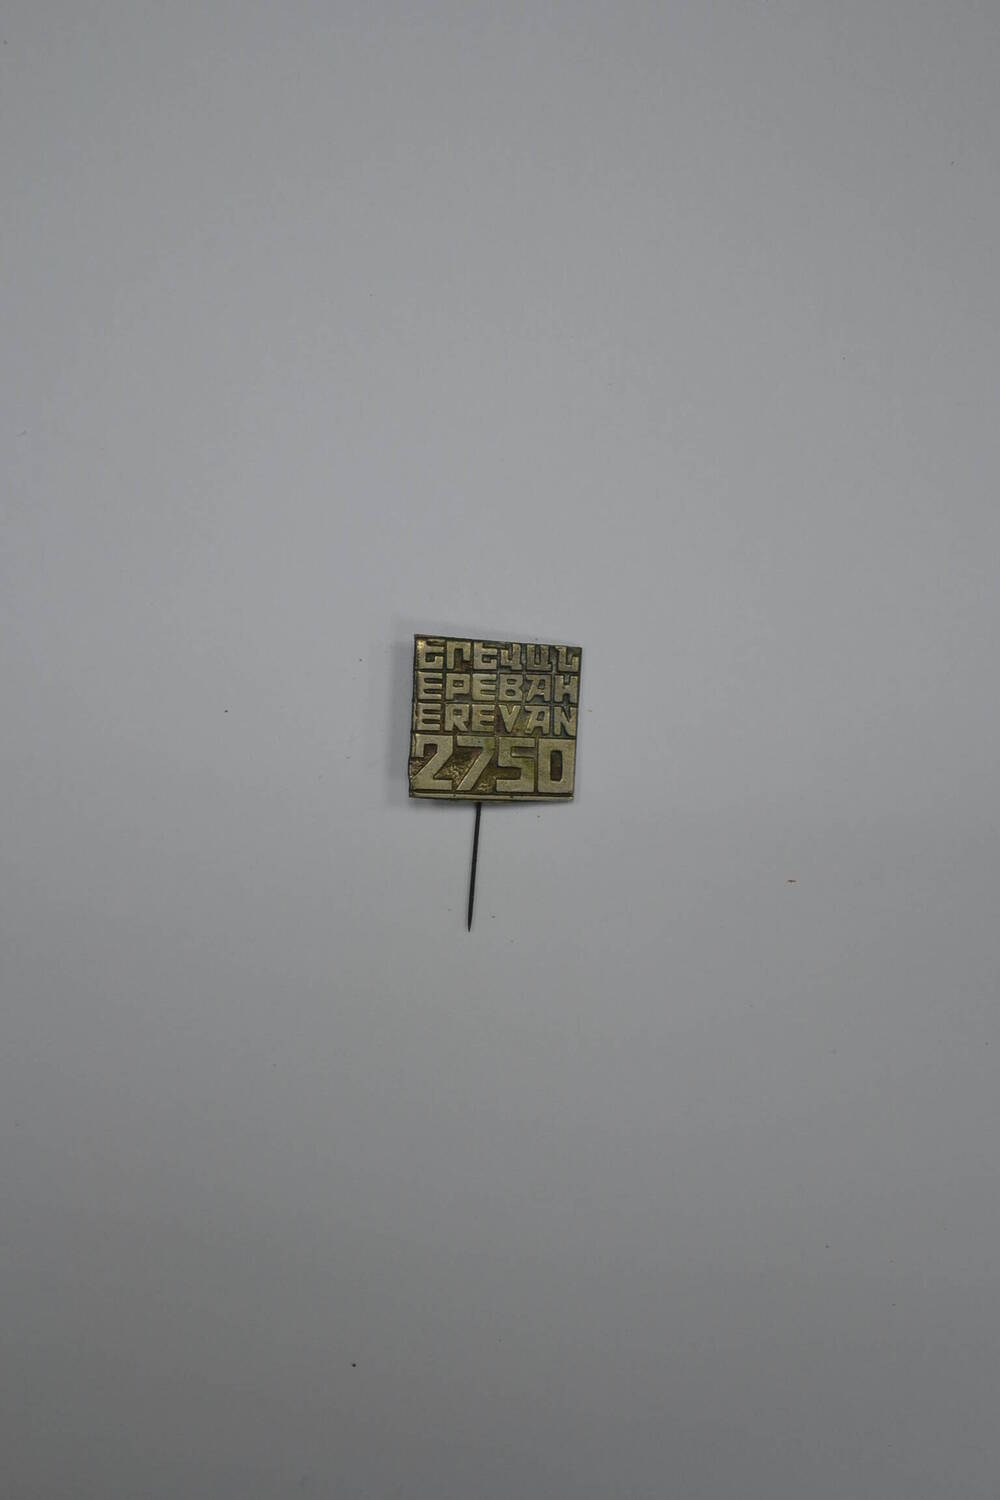 Значок на игле «Ереван 2750». 1970-е гг.